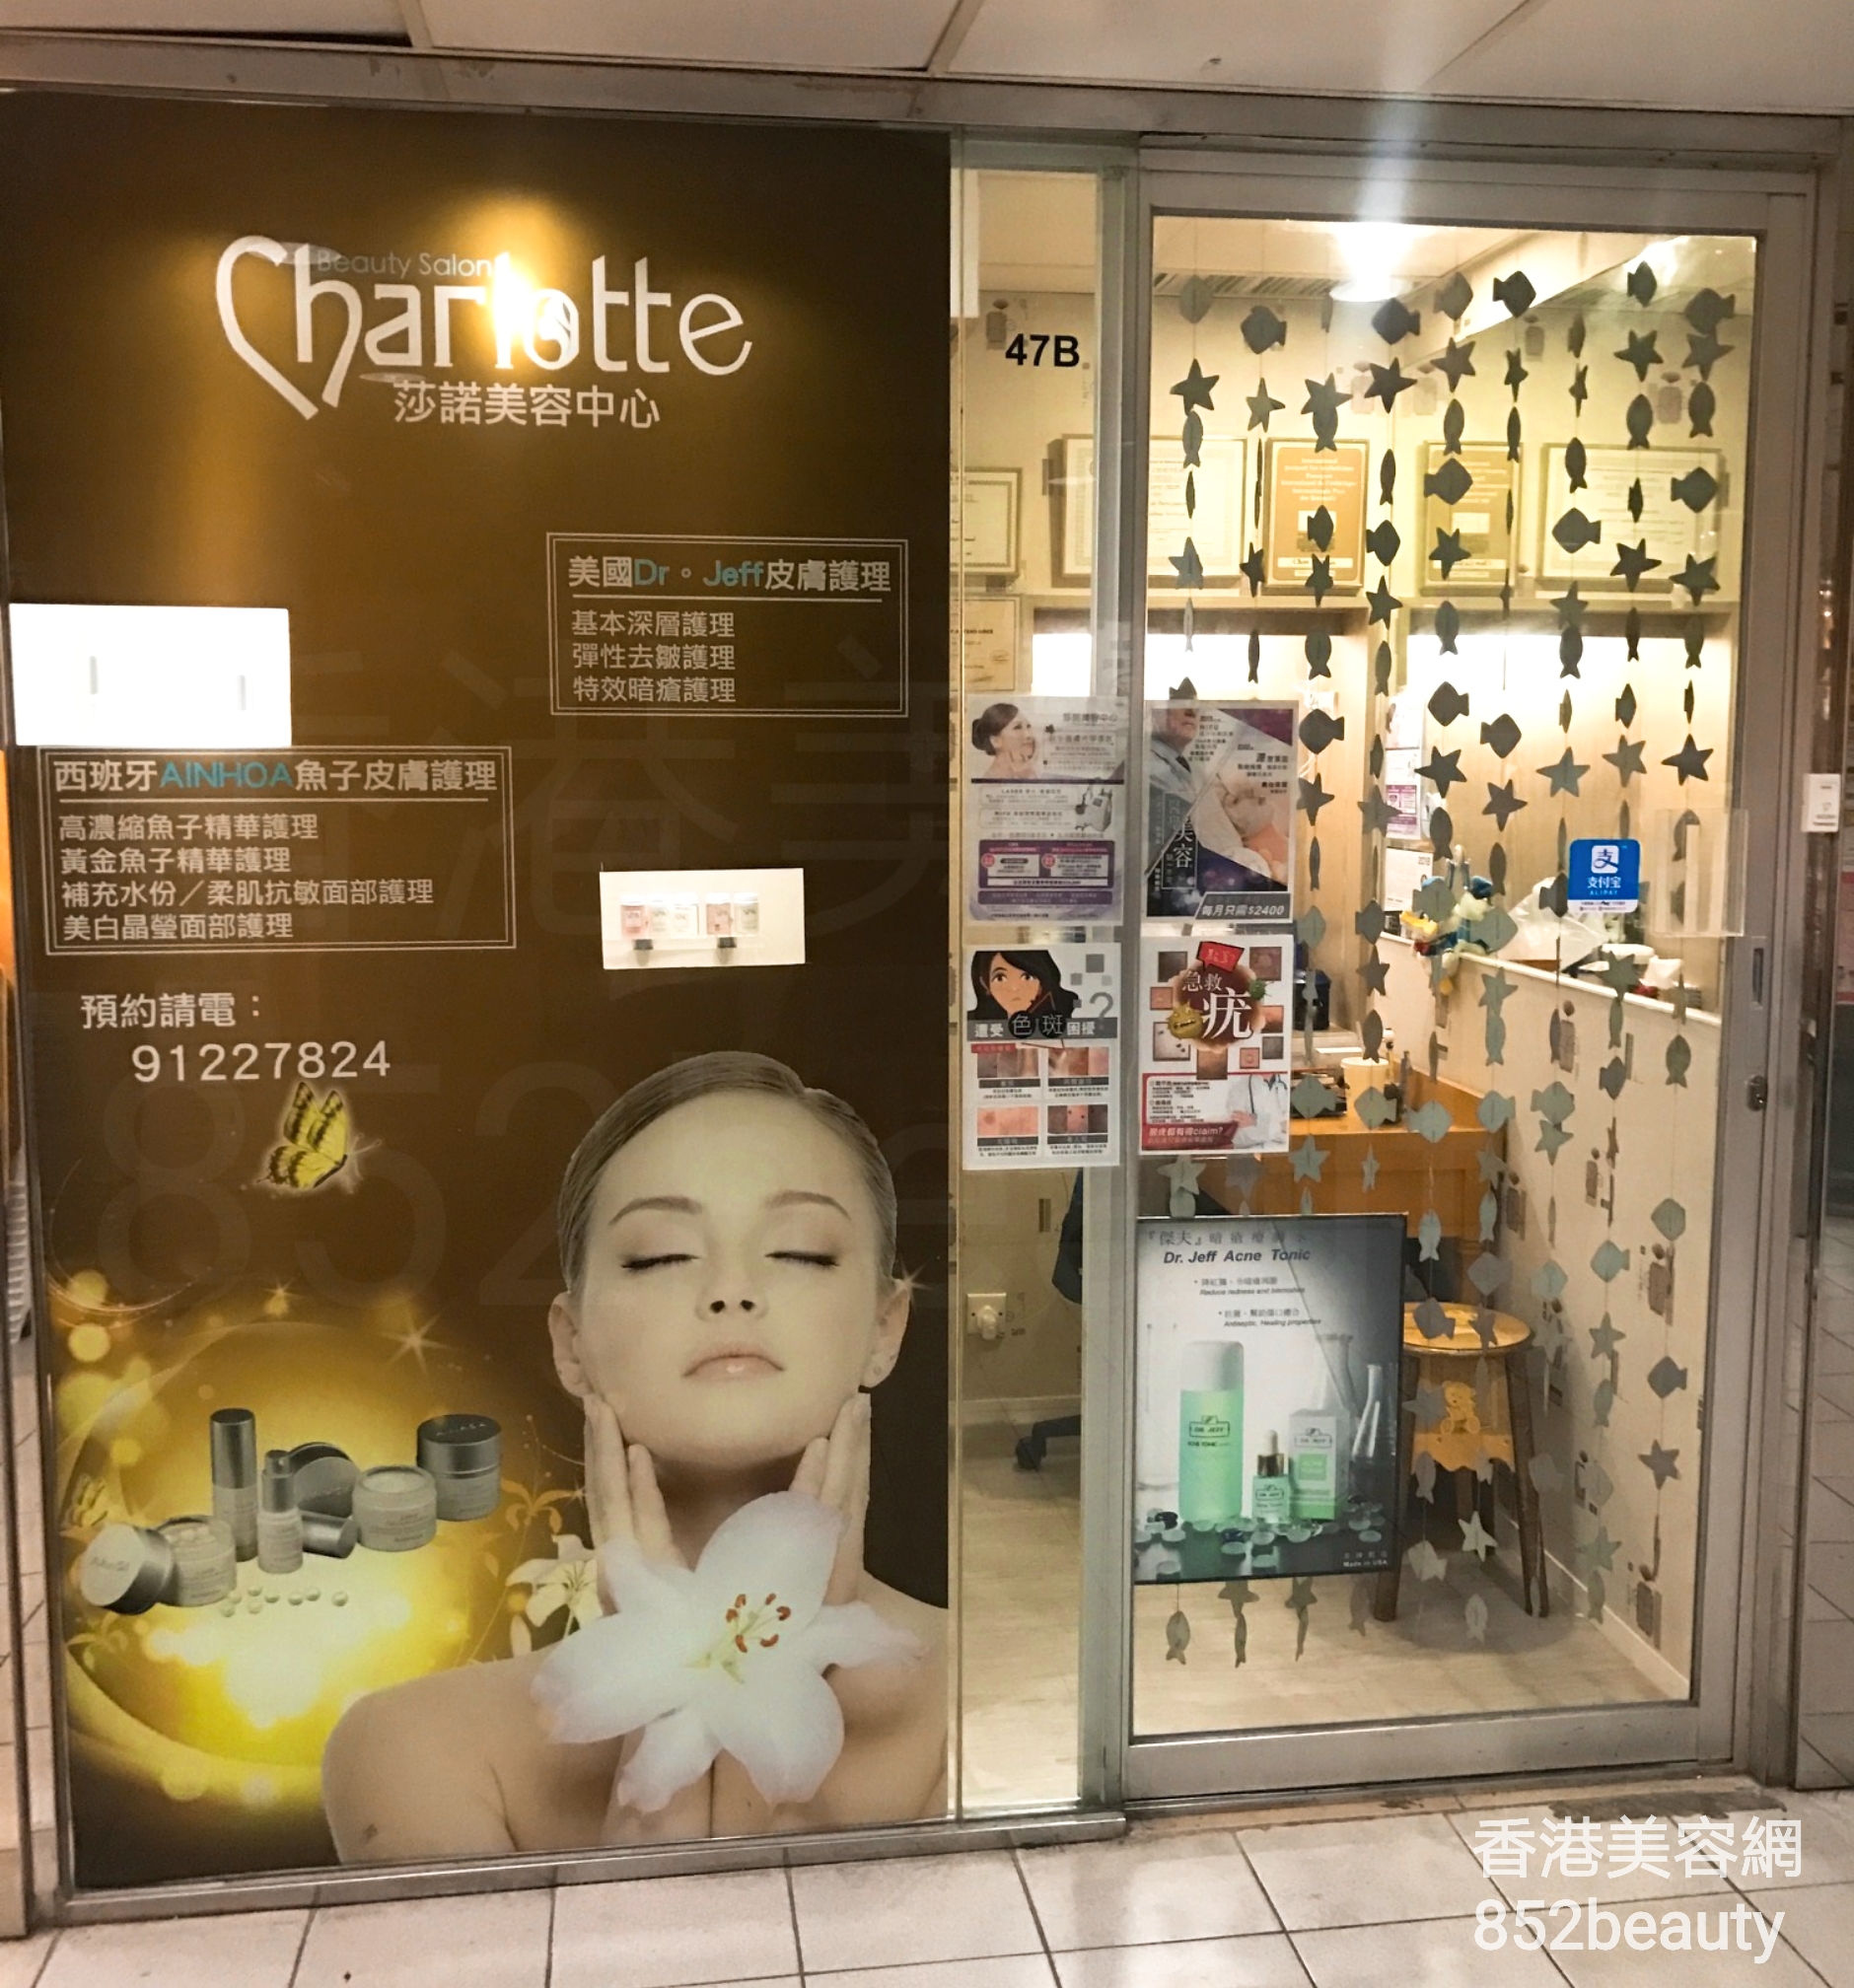 脱毛: 莎諾美容中心 Charlotte Beauty Salon